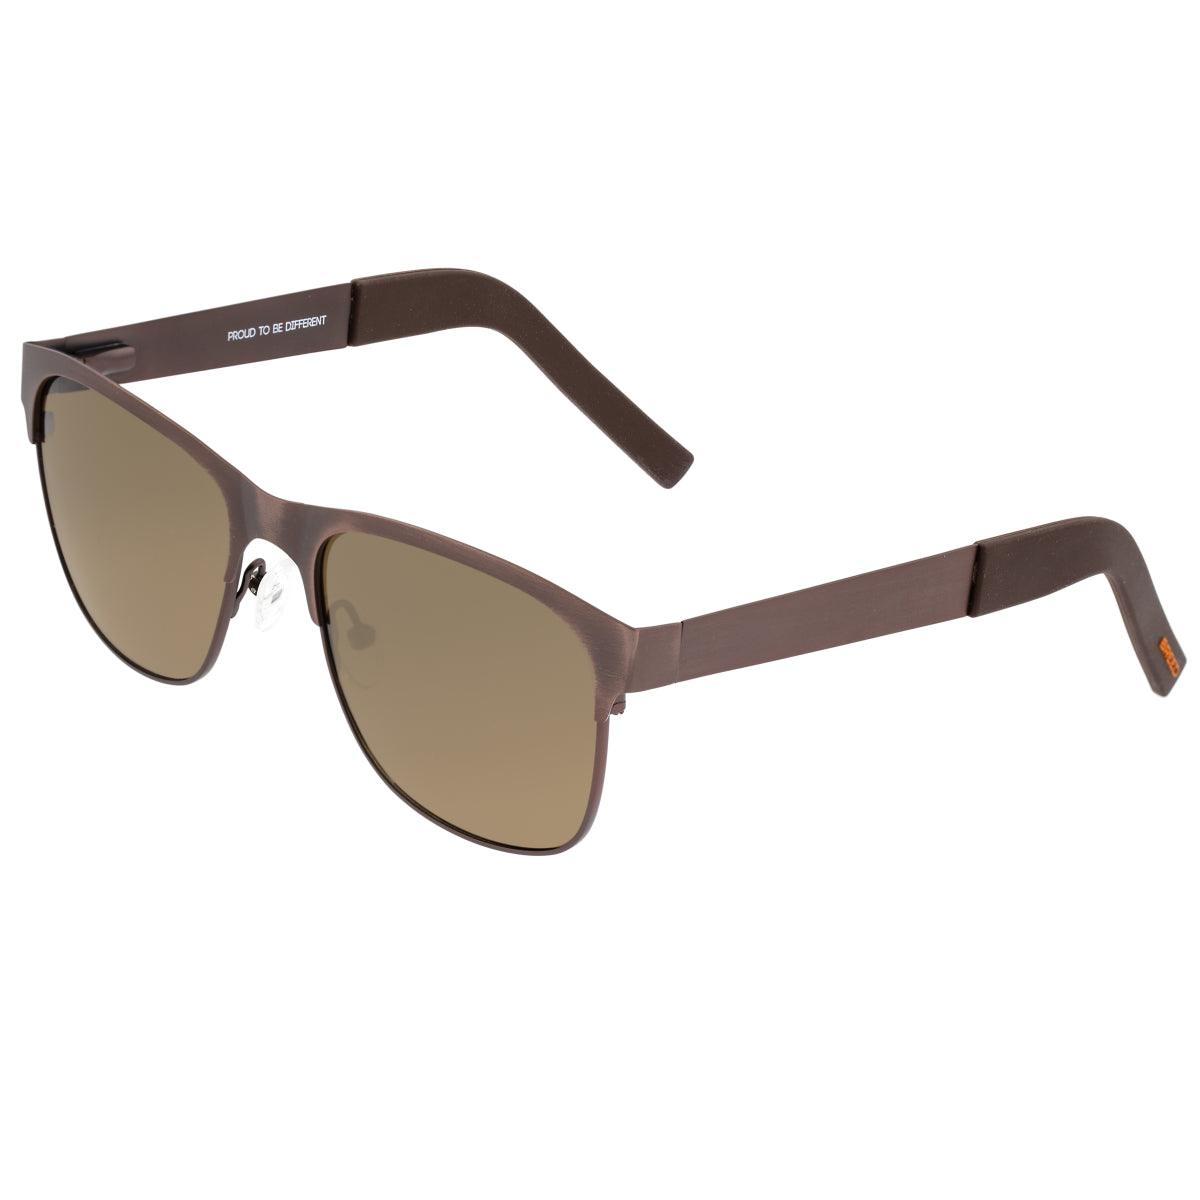 Breed Hypnos Titanium Polarized Sunglasses - Brown/Brown - BSG057RB